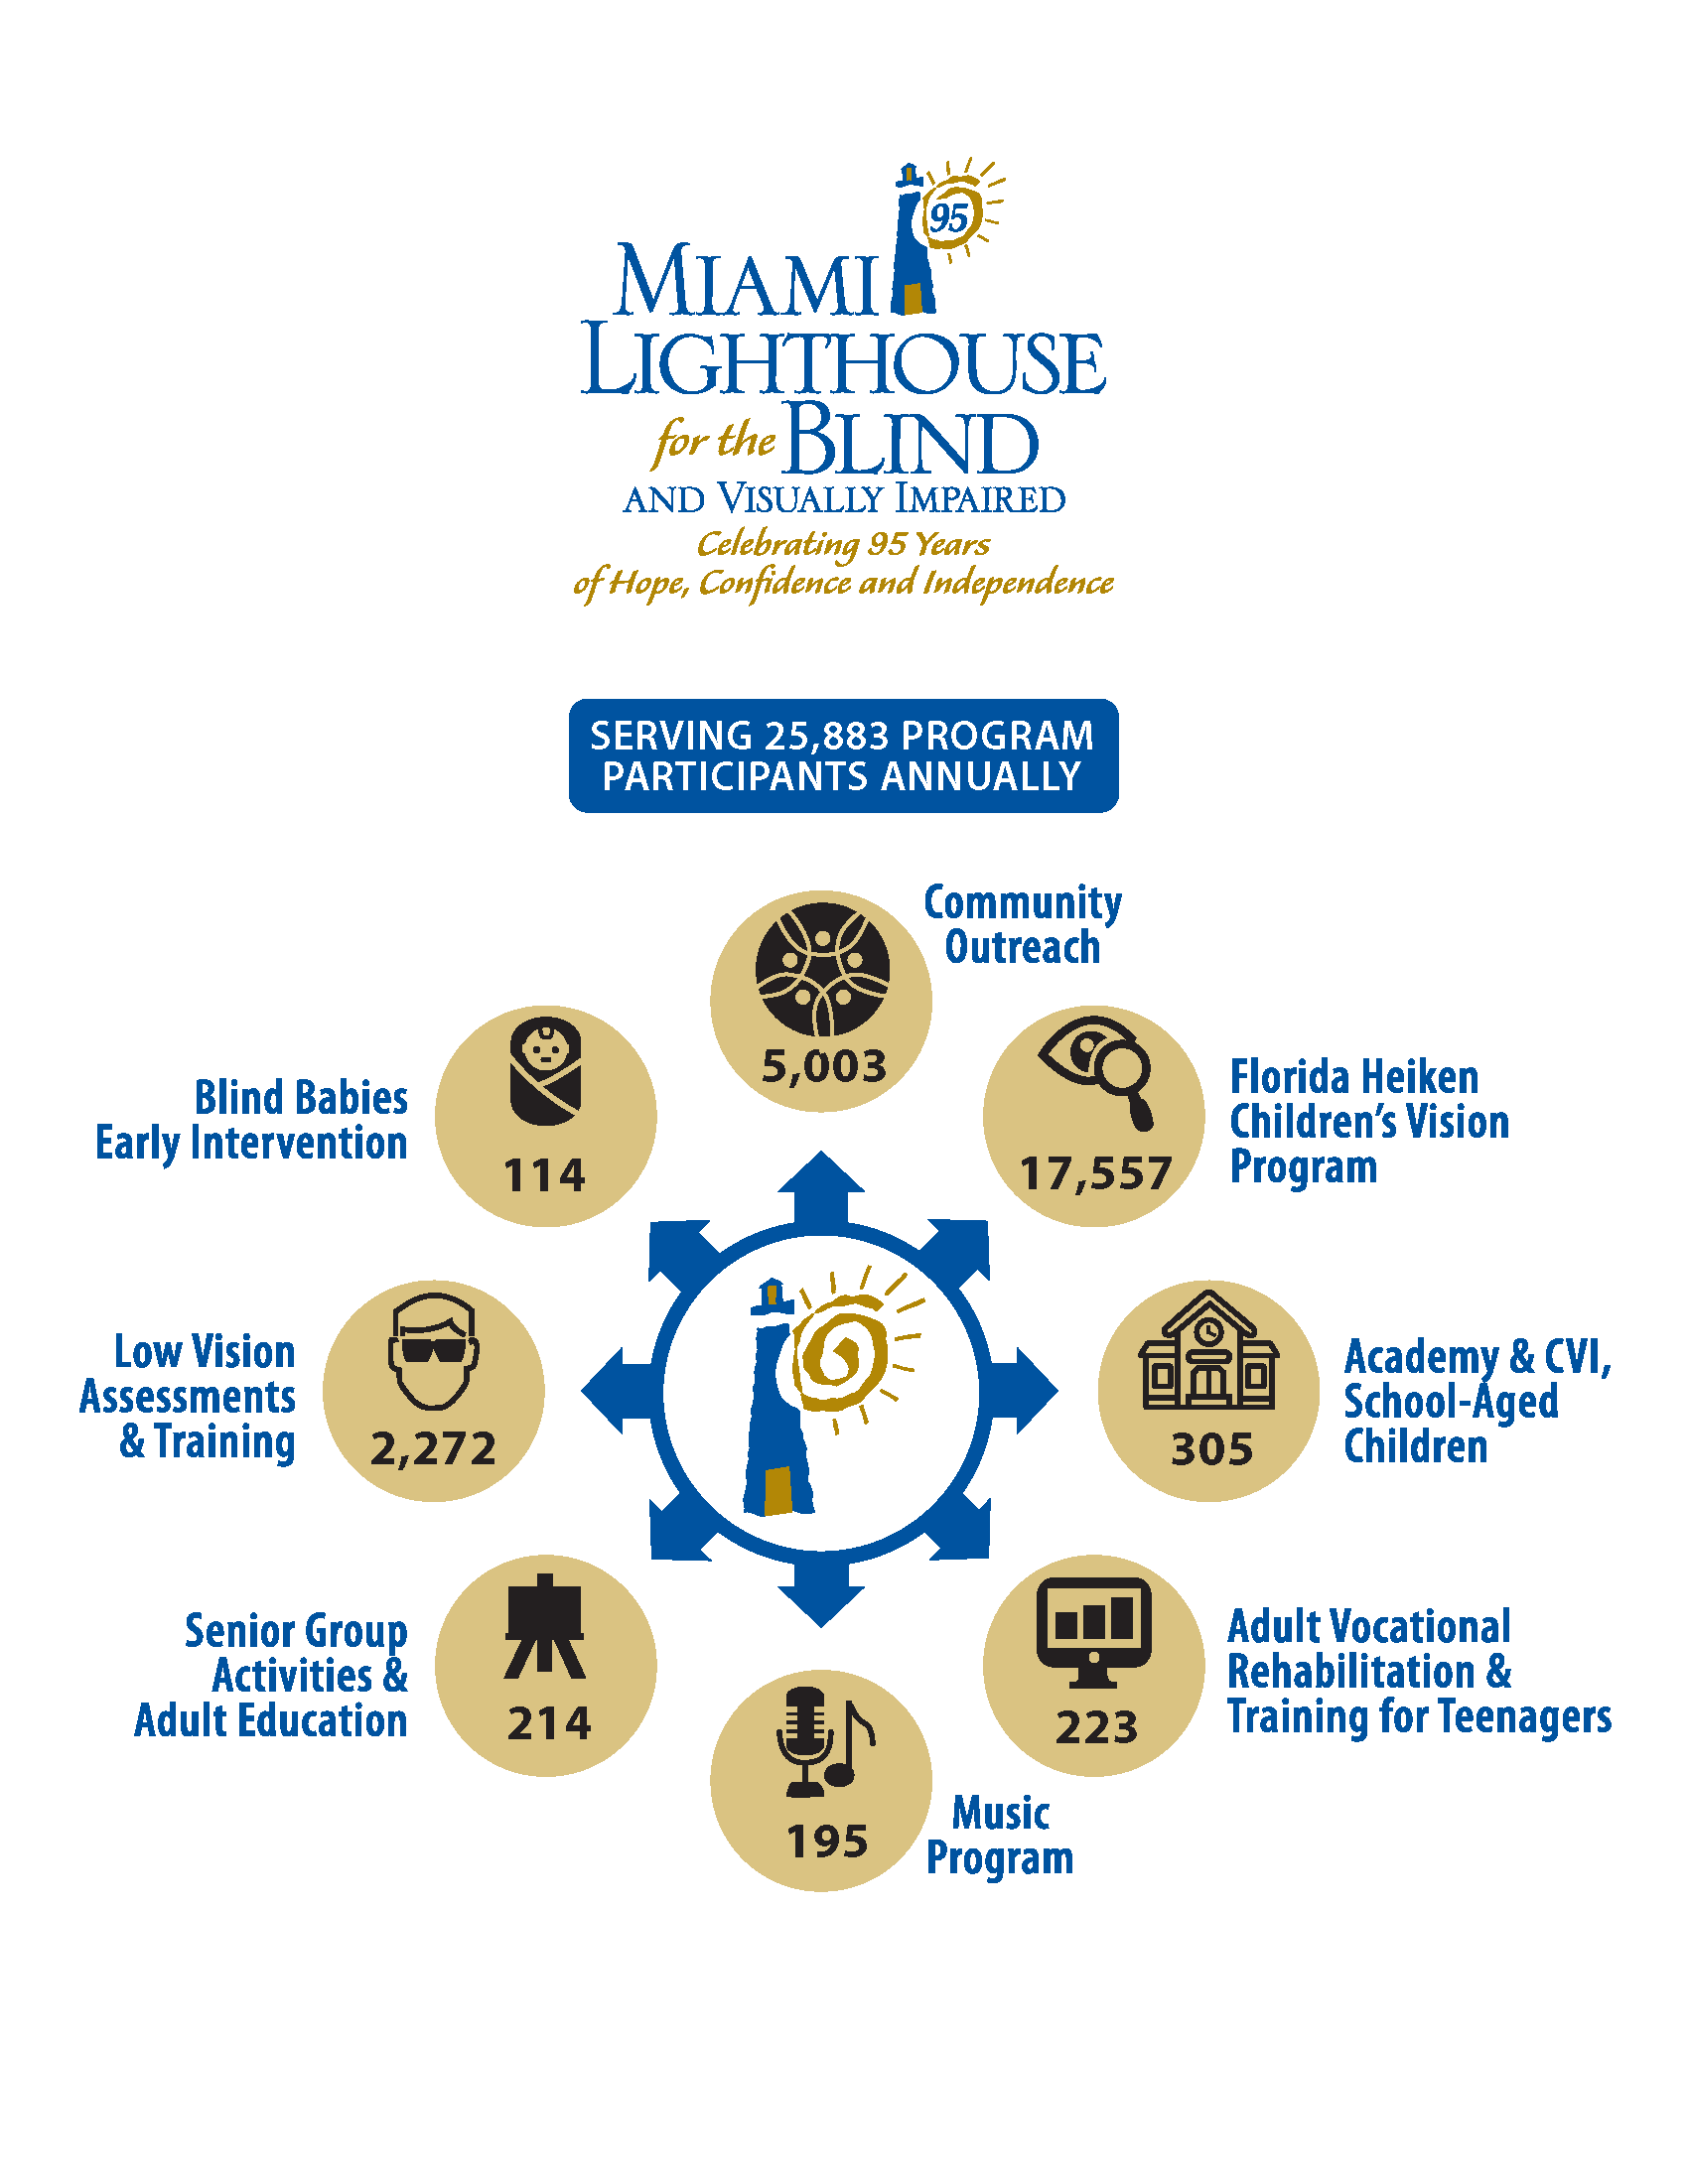 Miami Lighthouse serving 24,810 program participants anually